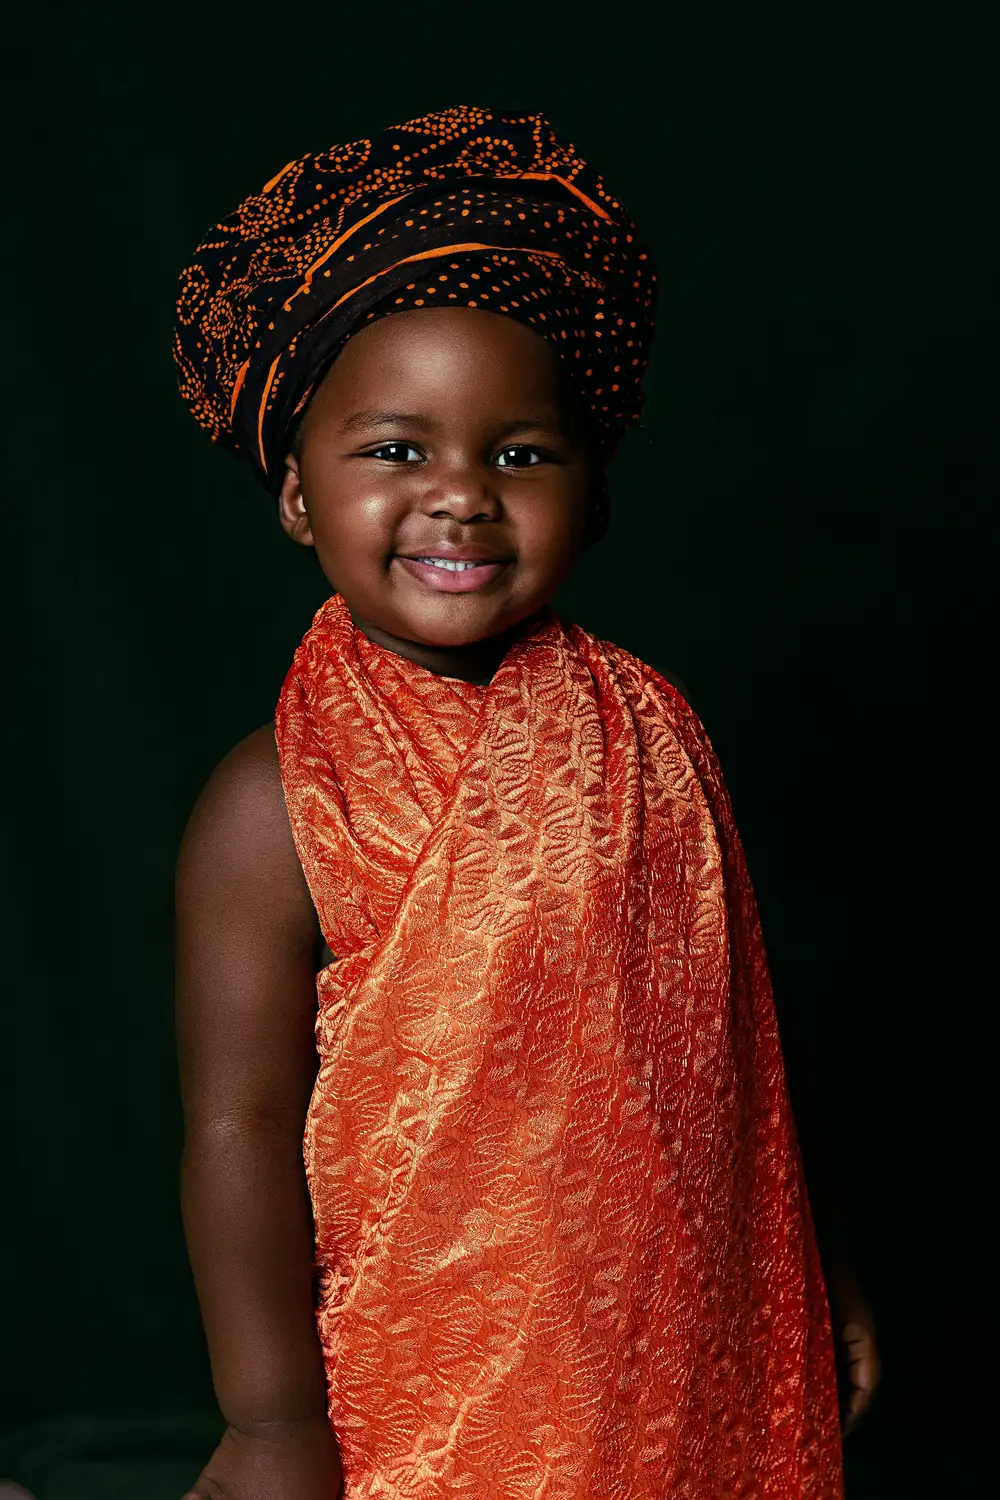 African child